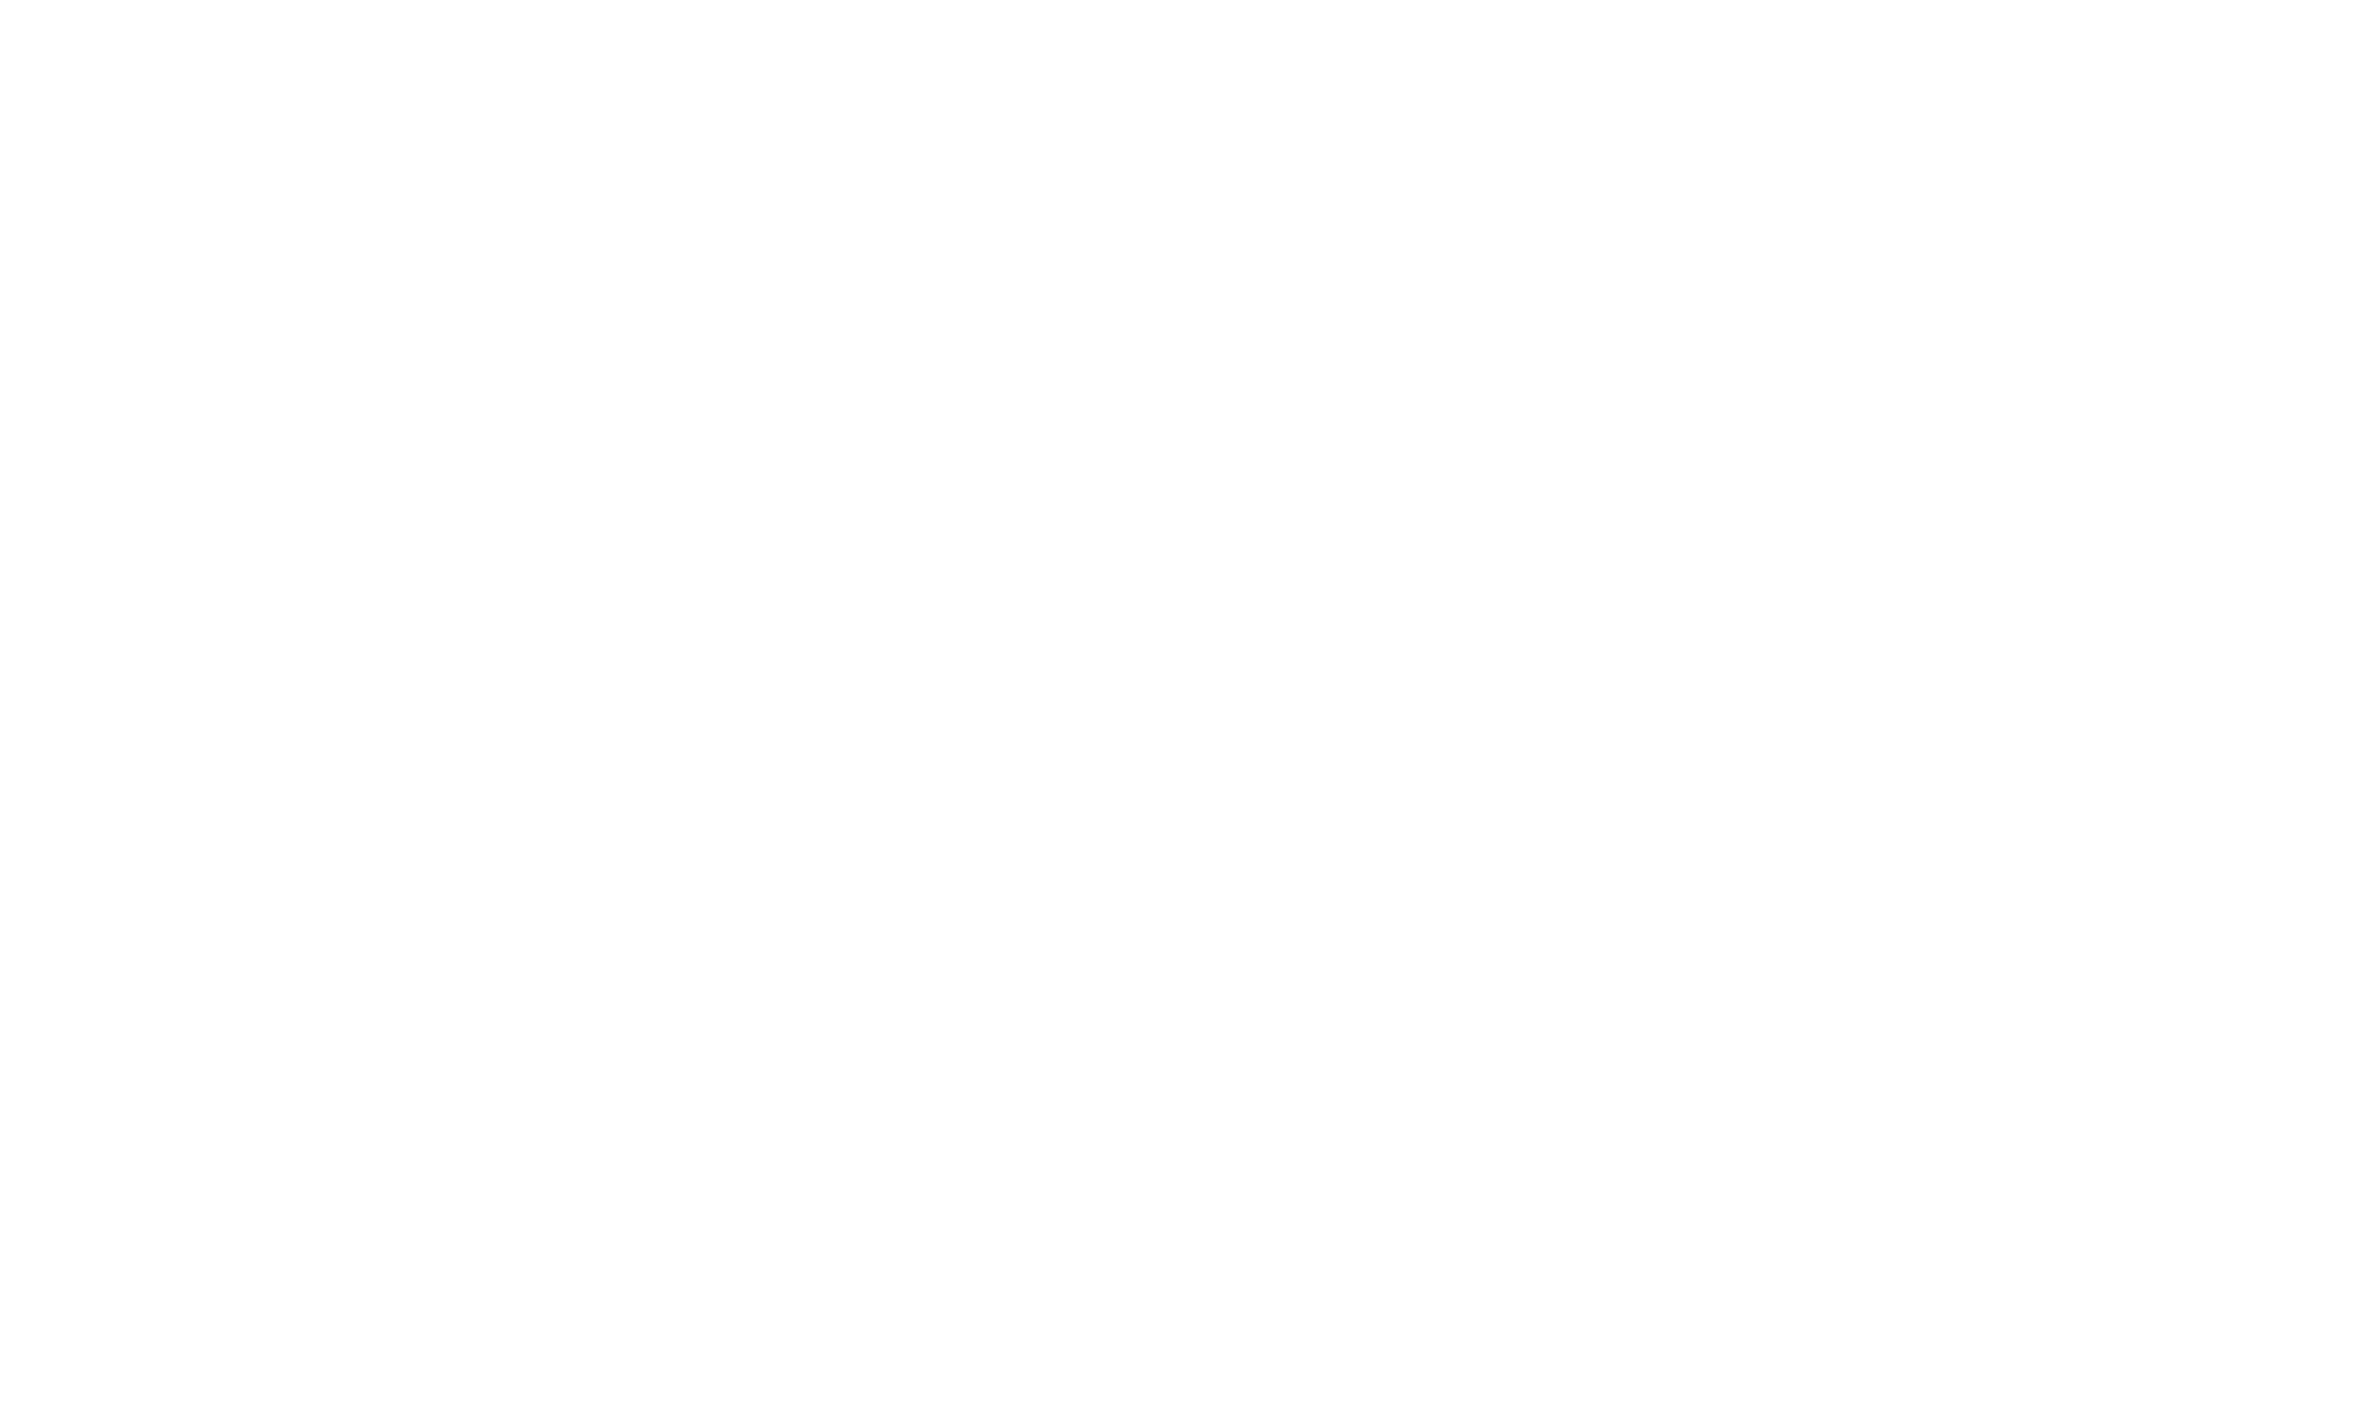 Martin Slunečko, režisér, dokumentarista